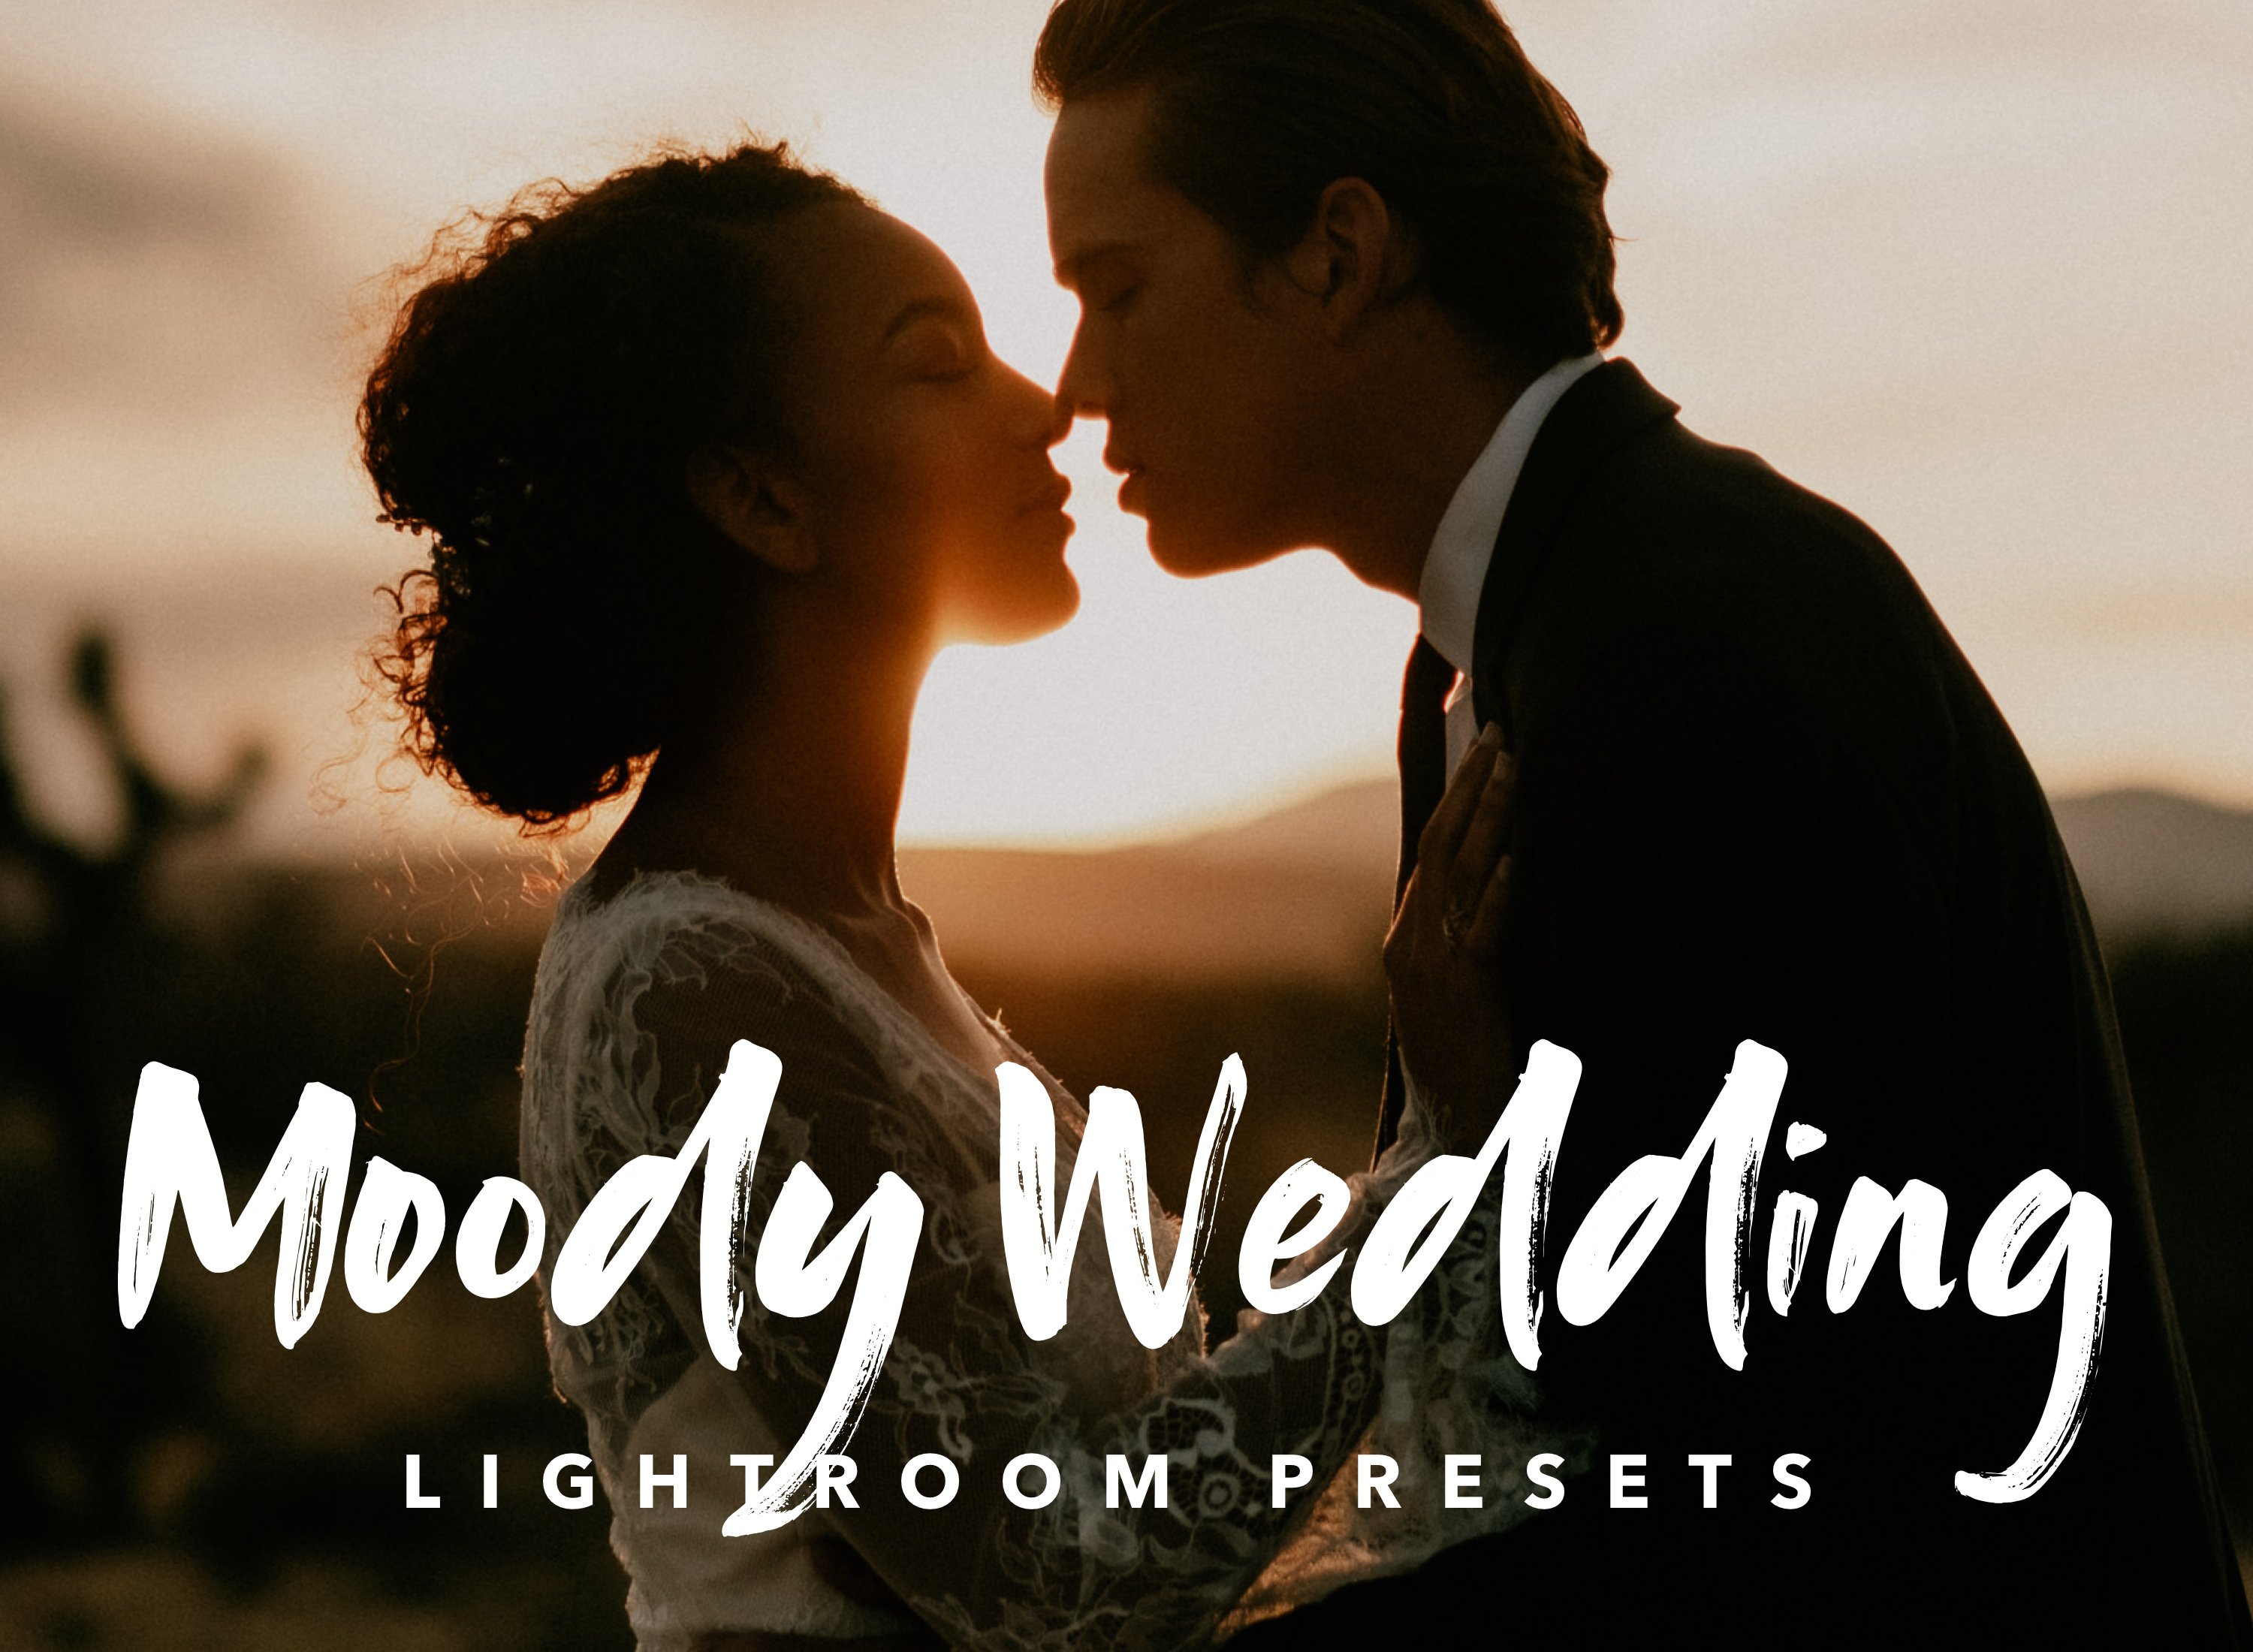 Moody Wedding 01 - Lightroom Presetscover image.